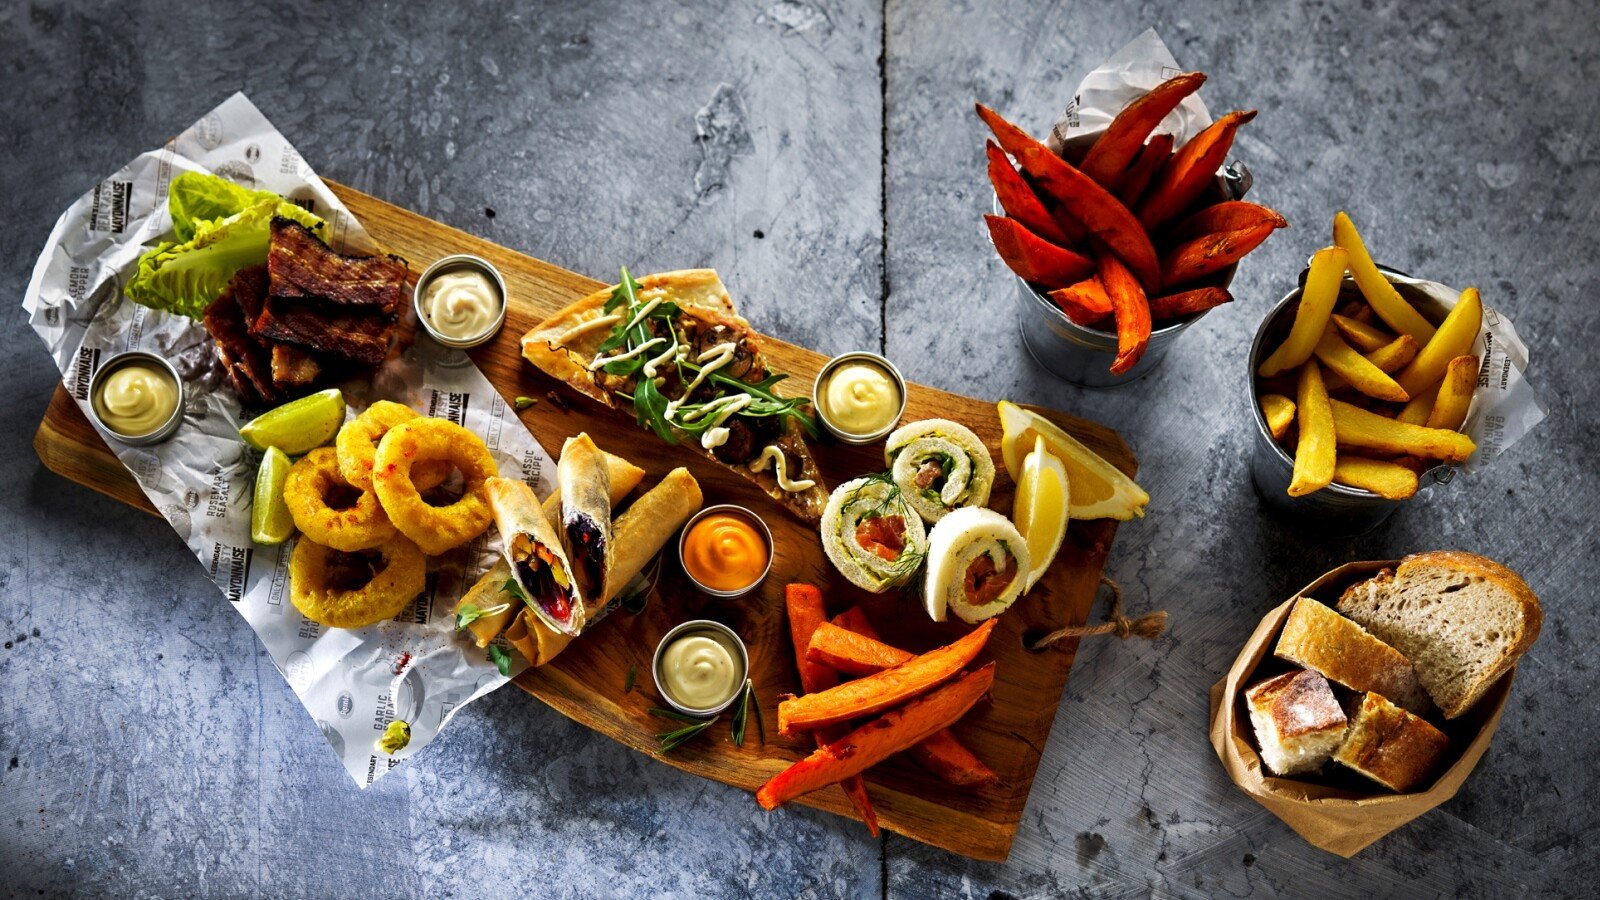 Remia Legendary Real Tasty Mayonaise borrelplank met diverse snacks en sauzen